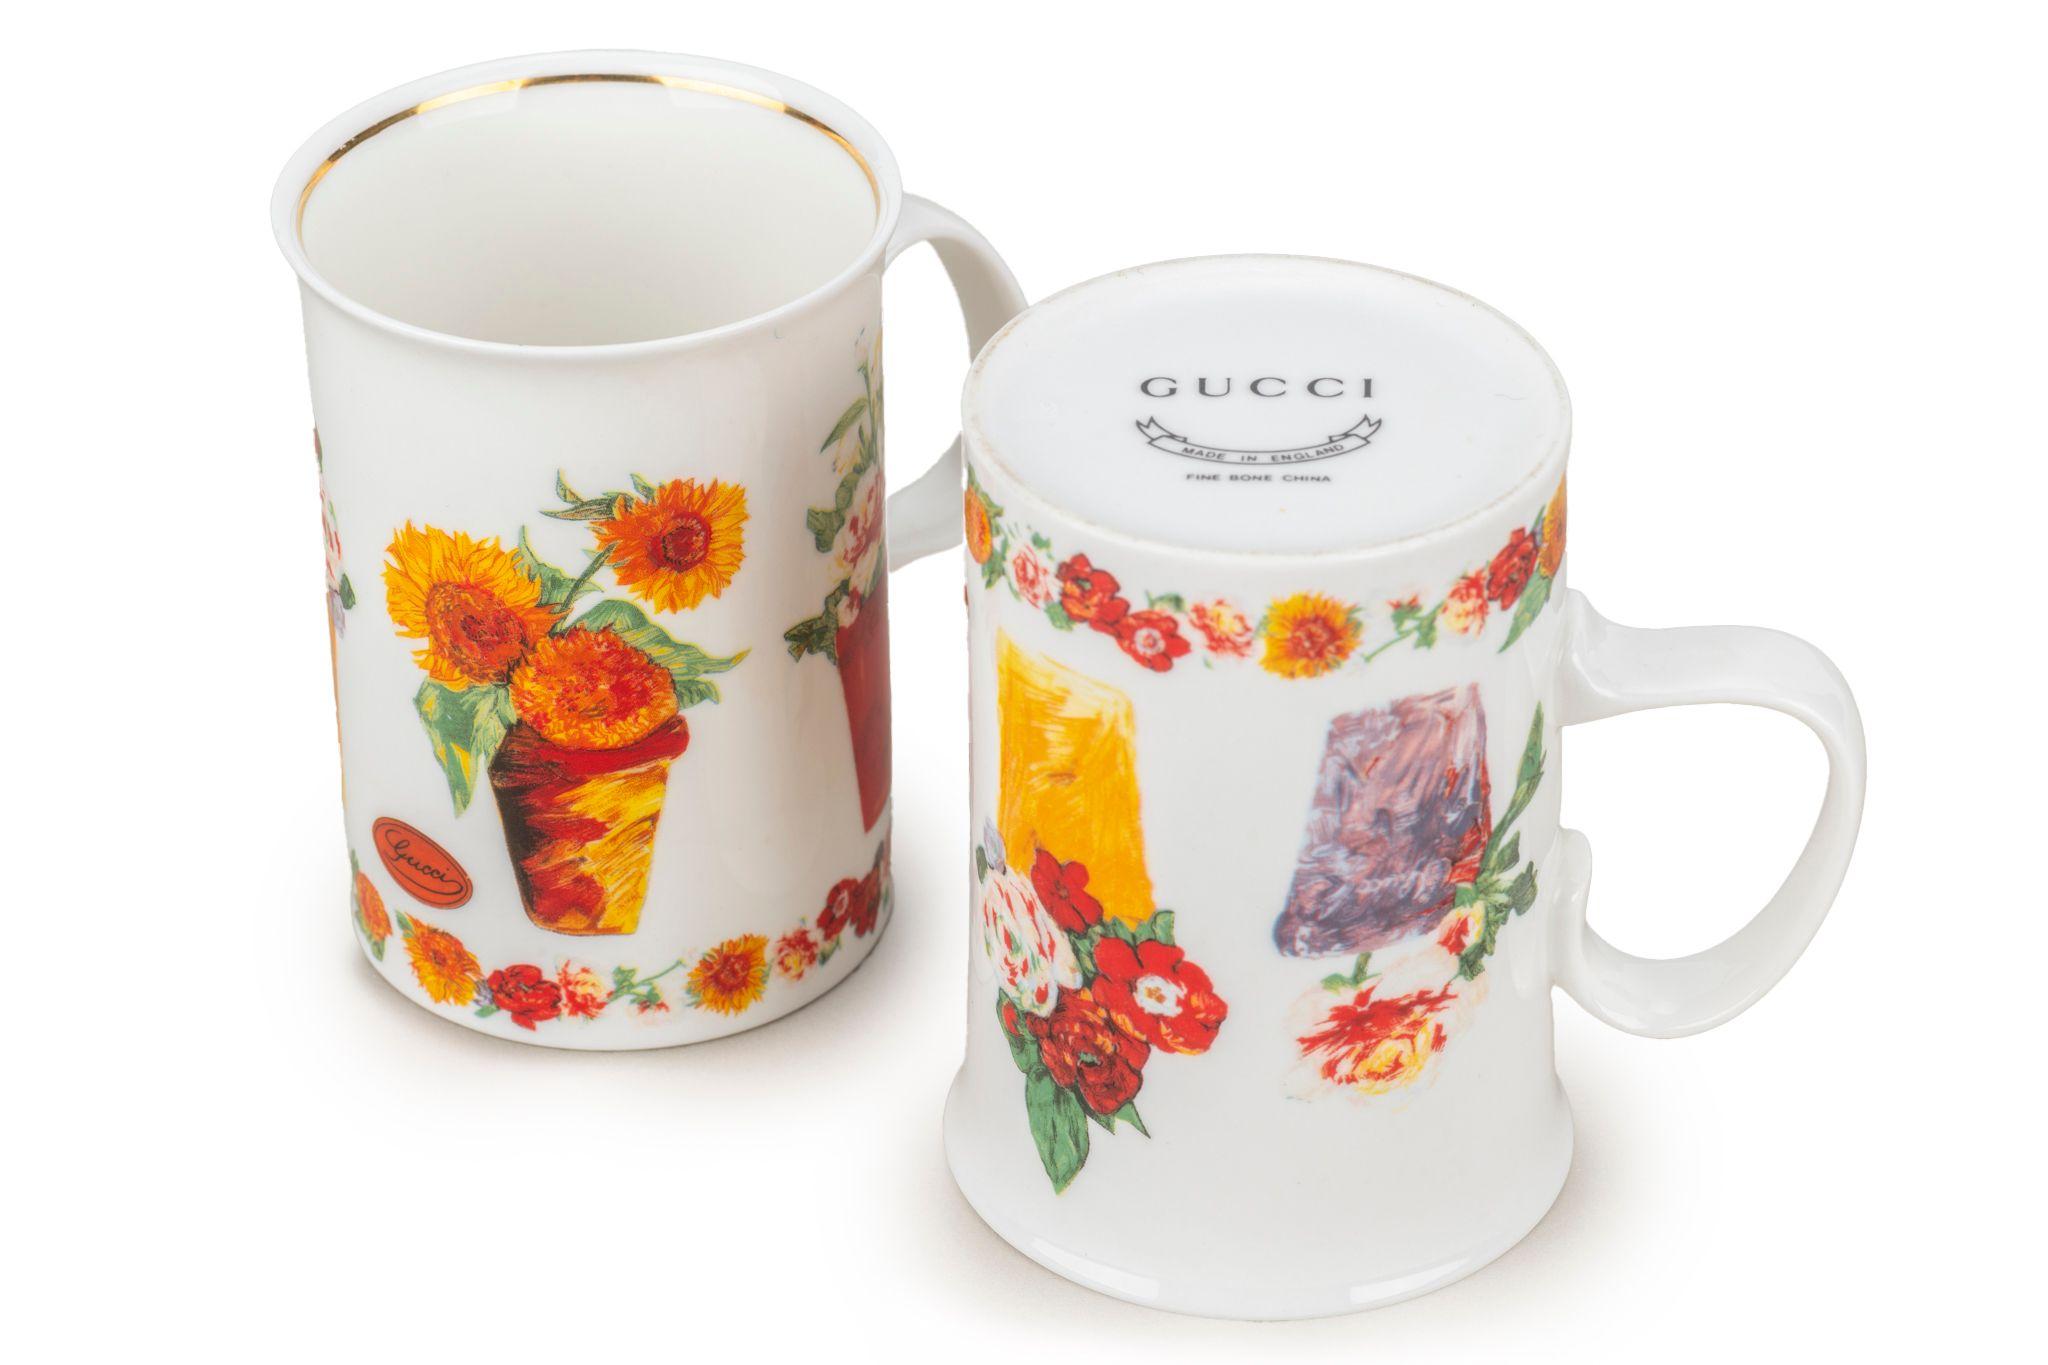 Gucci Set/2 Porcelain Flower Vase Teacup In Excellent Condition For Sale In West Hollywood, CA